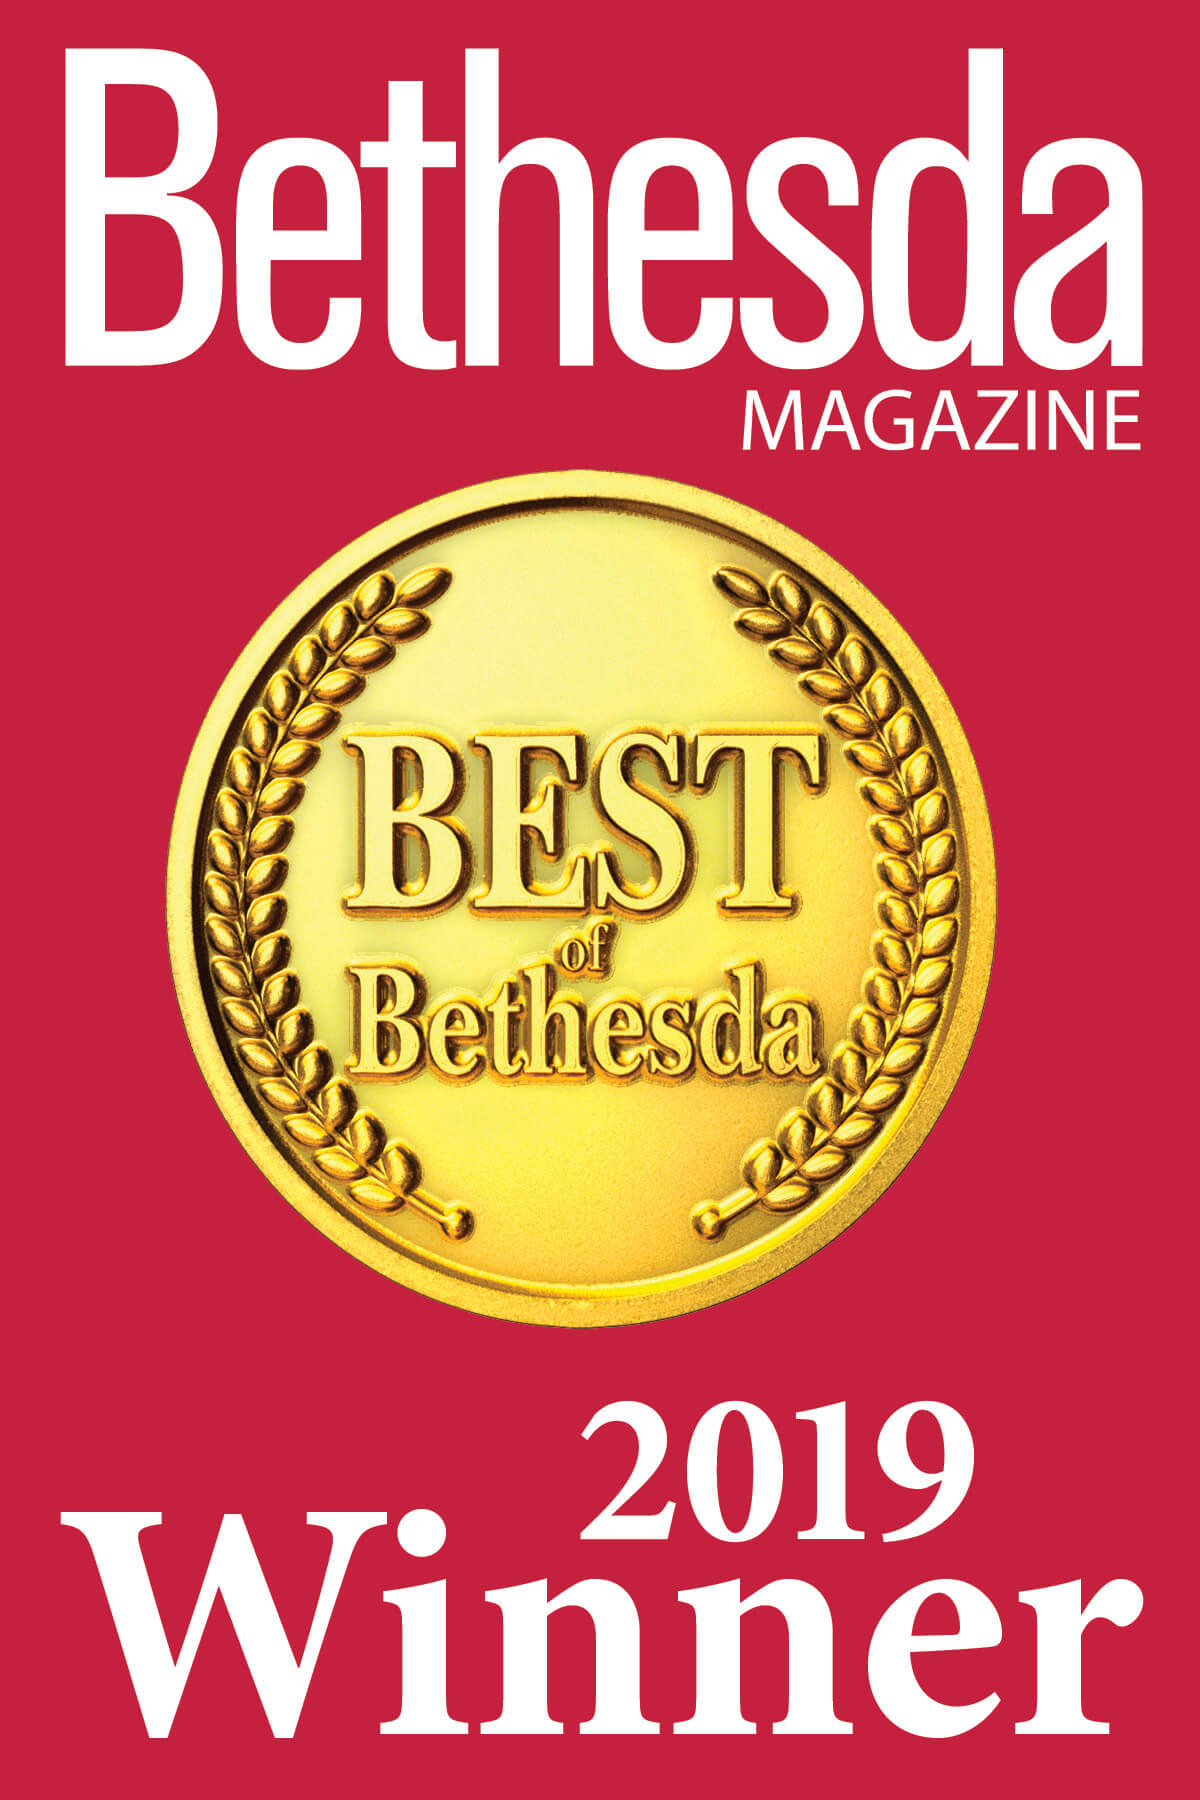 Bethesda Magazine 2019 Winner Best of Bethesda Award